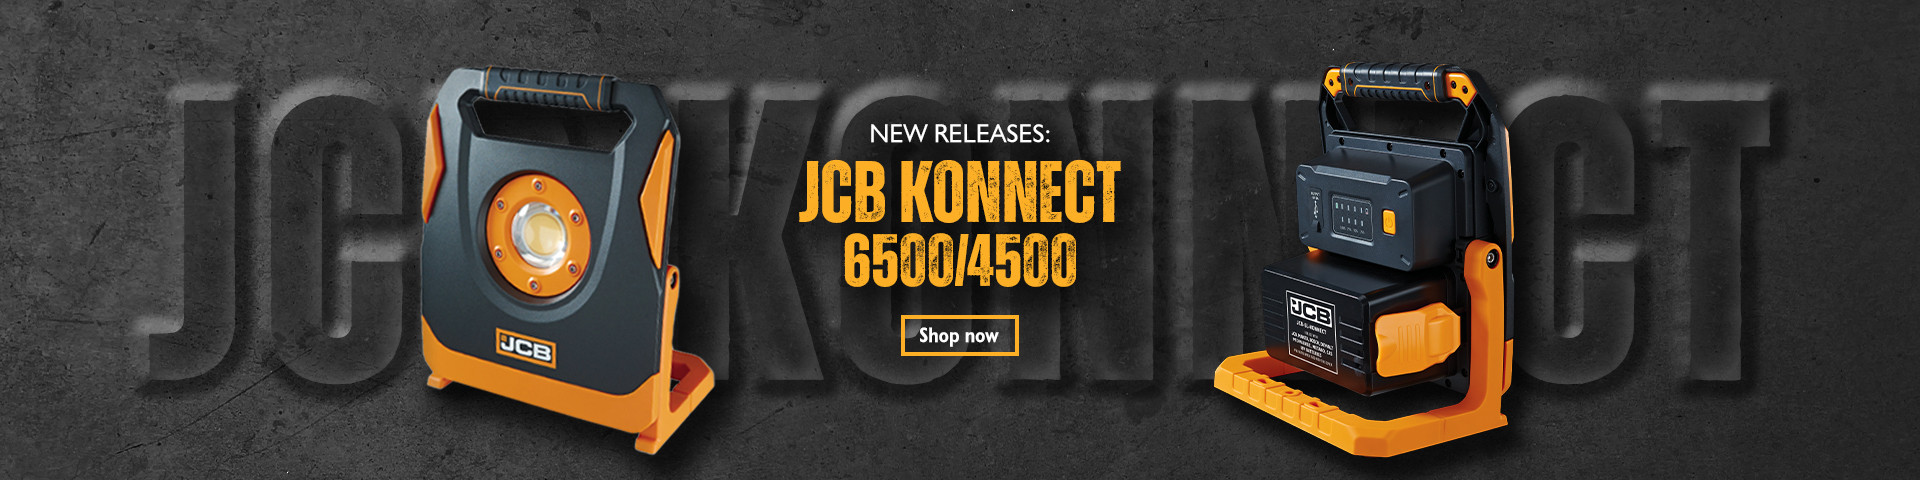 JCB Konnect 6500/4500 [graphical banner]